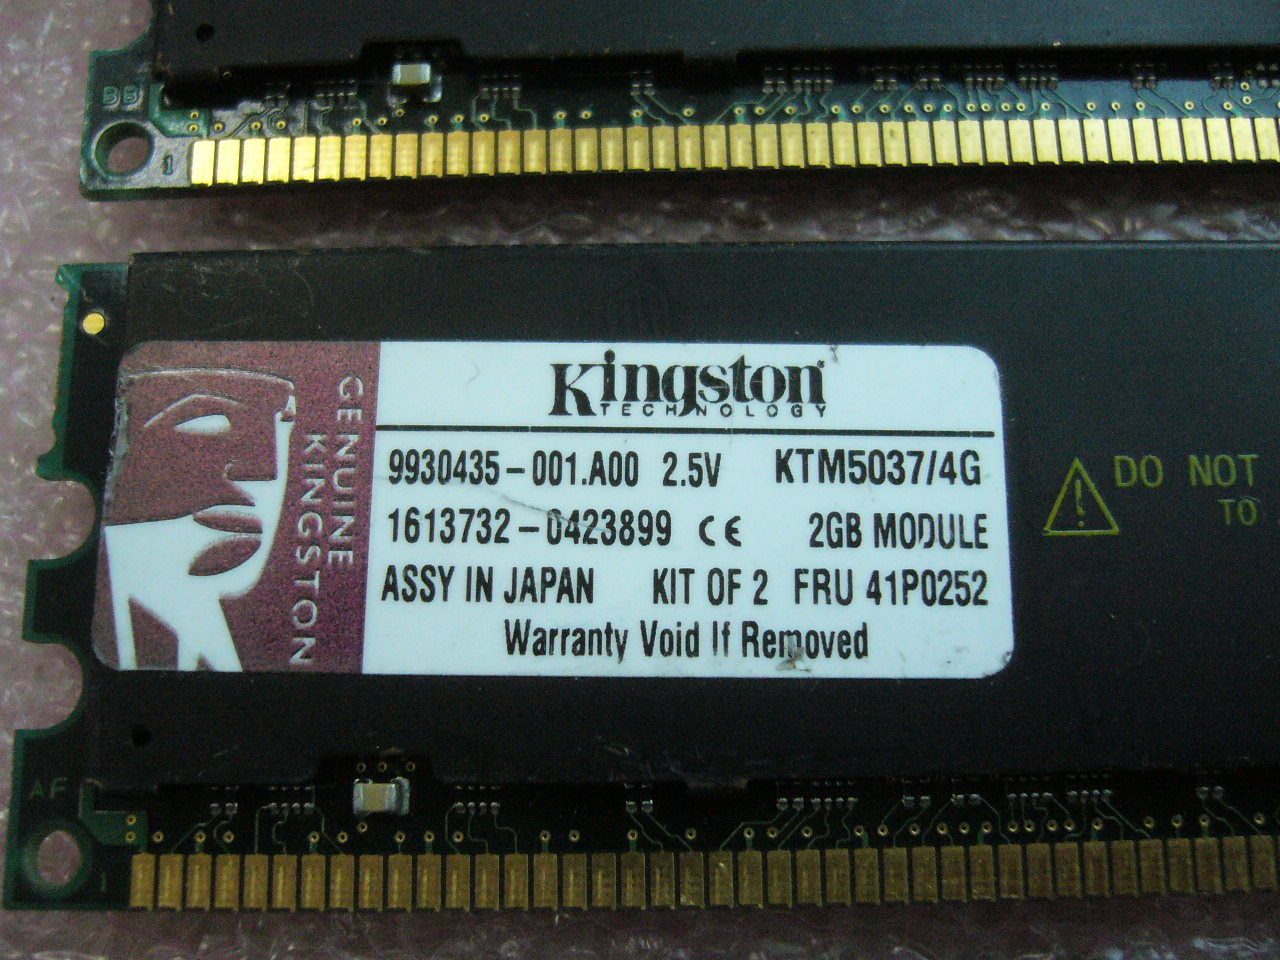 1x 2GB Kingston KTM5037/4G DDR 266,PC2100R ECC Registered Server memory 41P0252